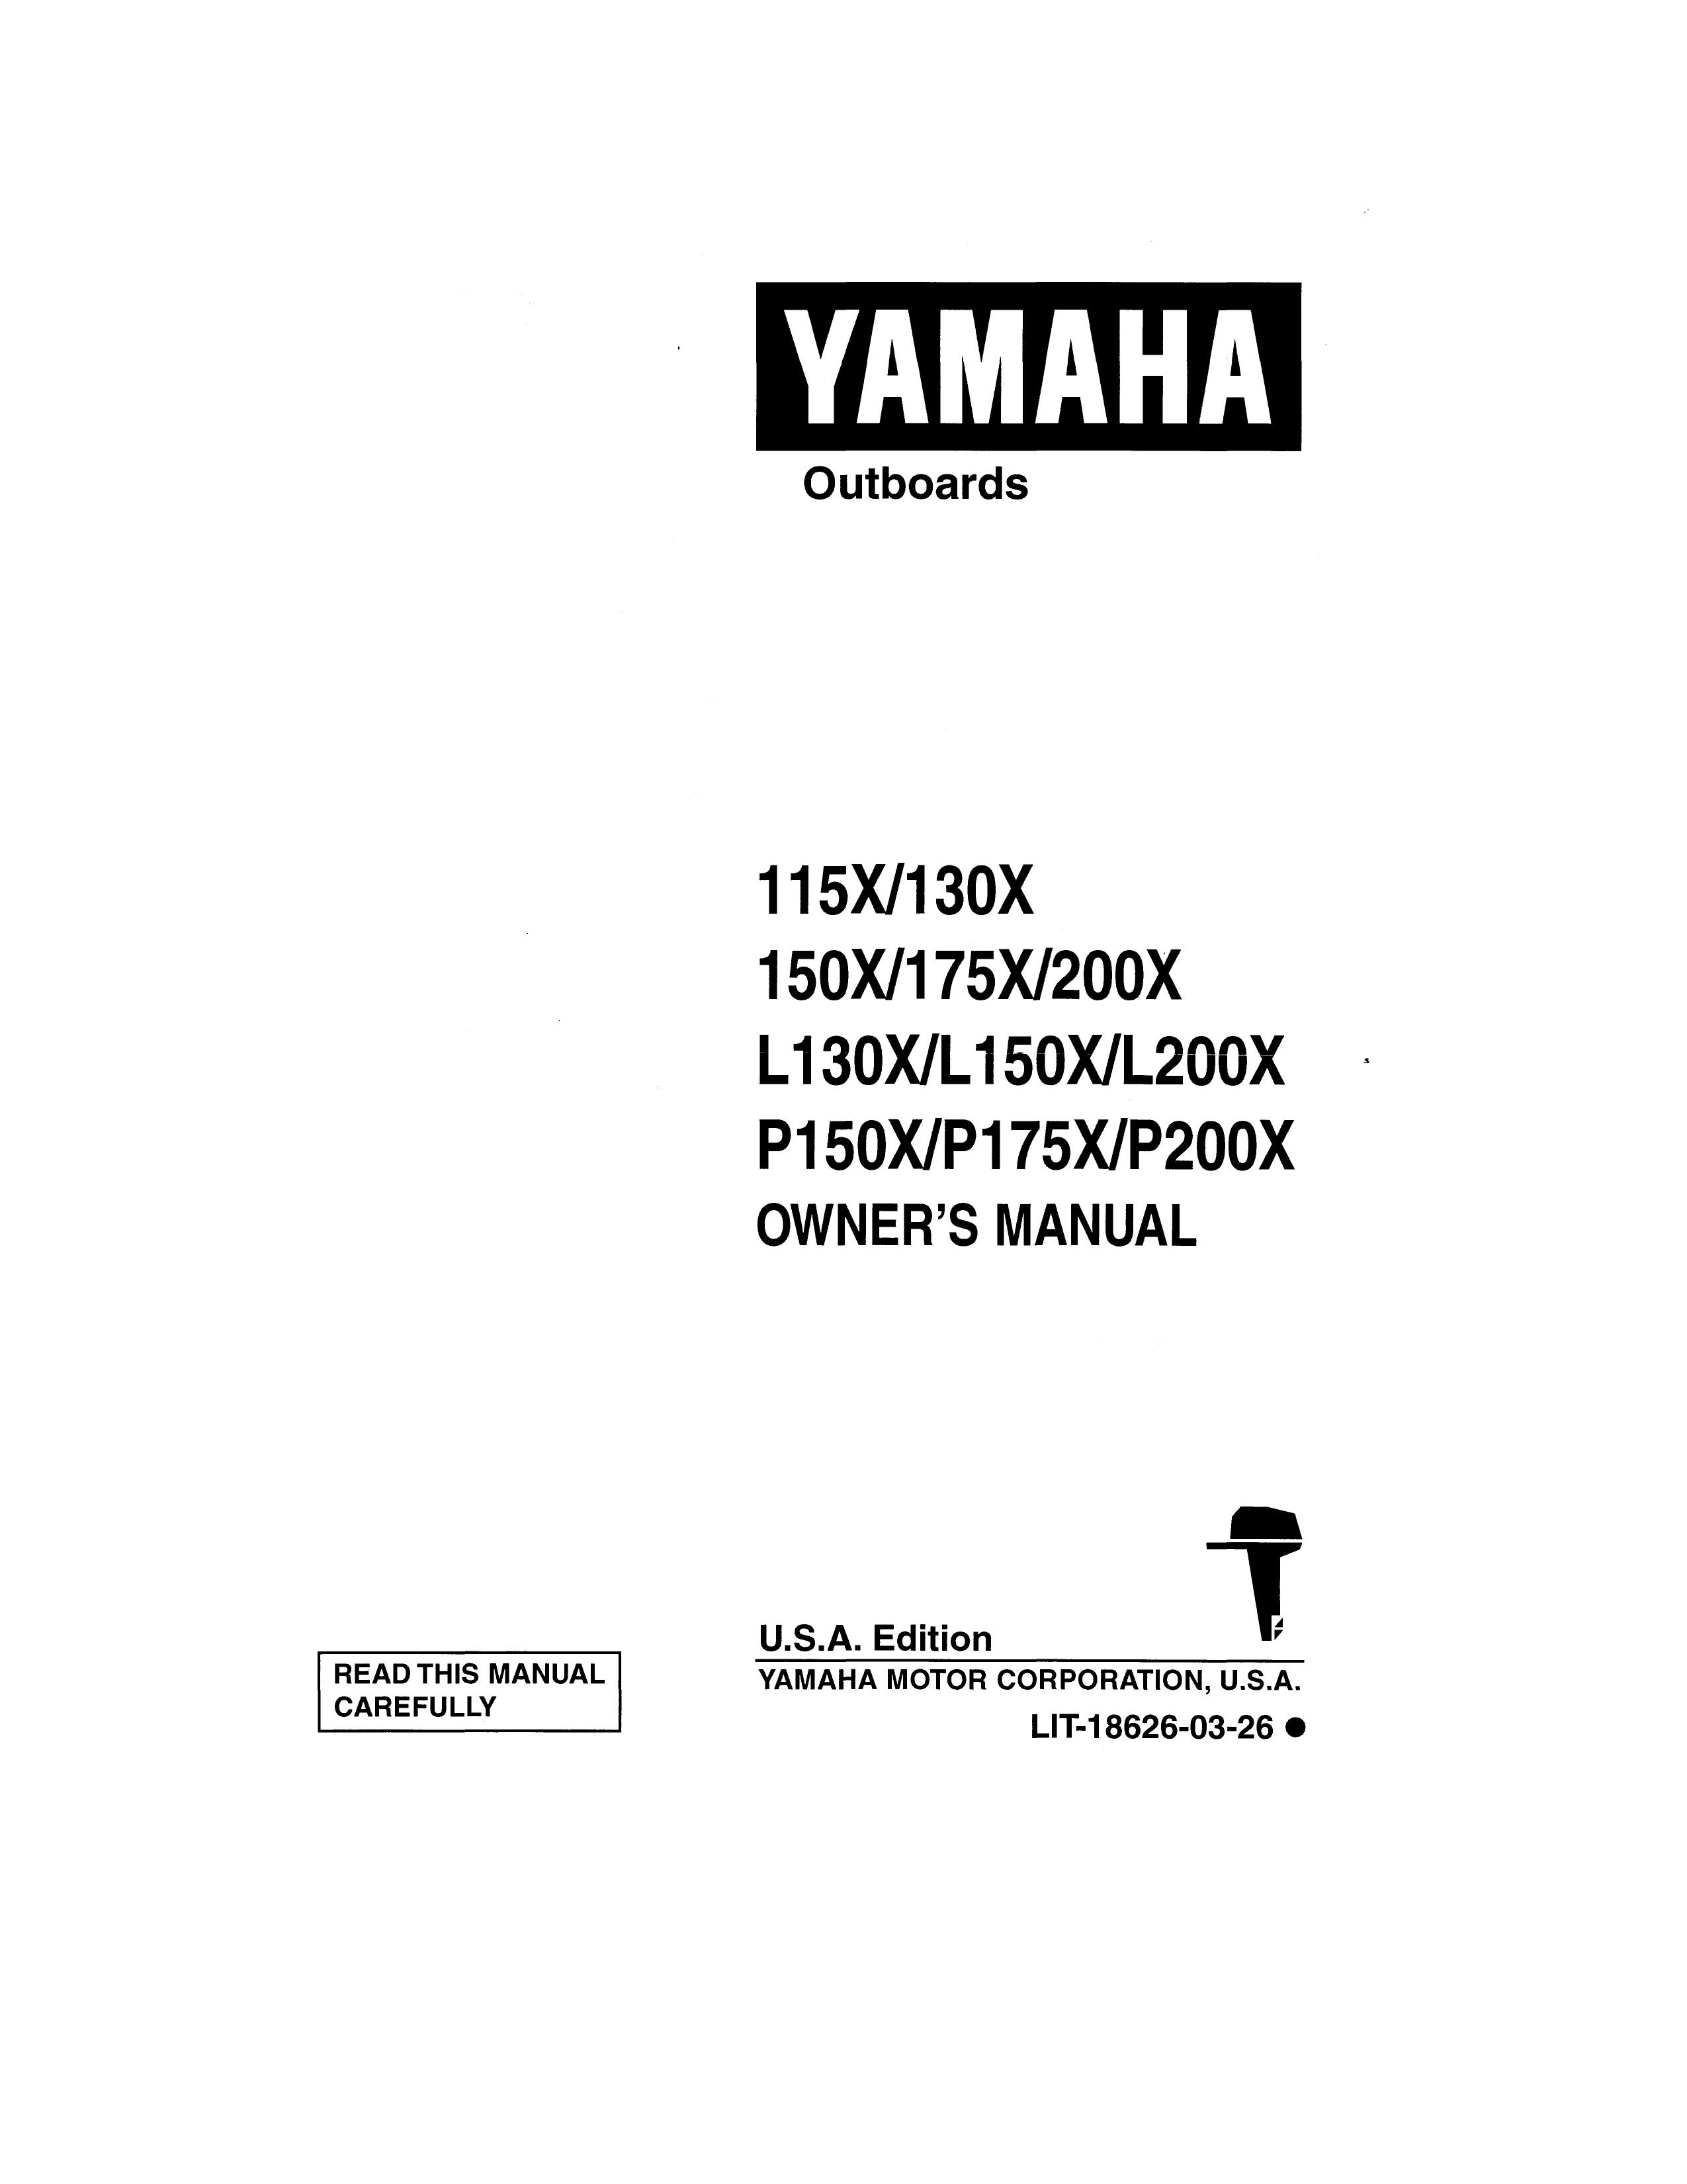 Yamaha L200X Outboard Motor User Manual